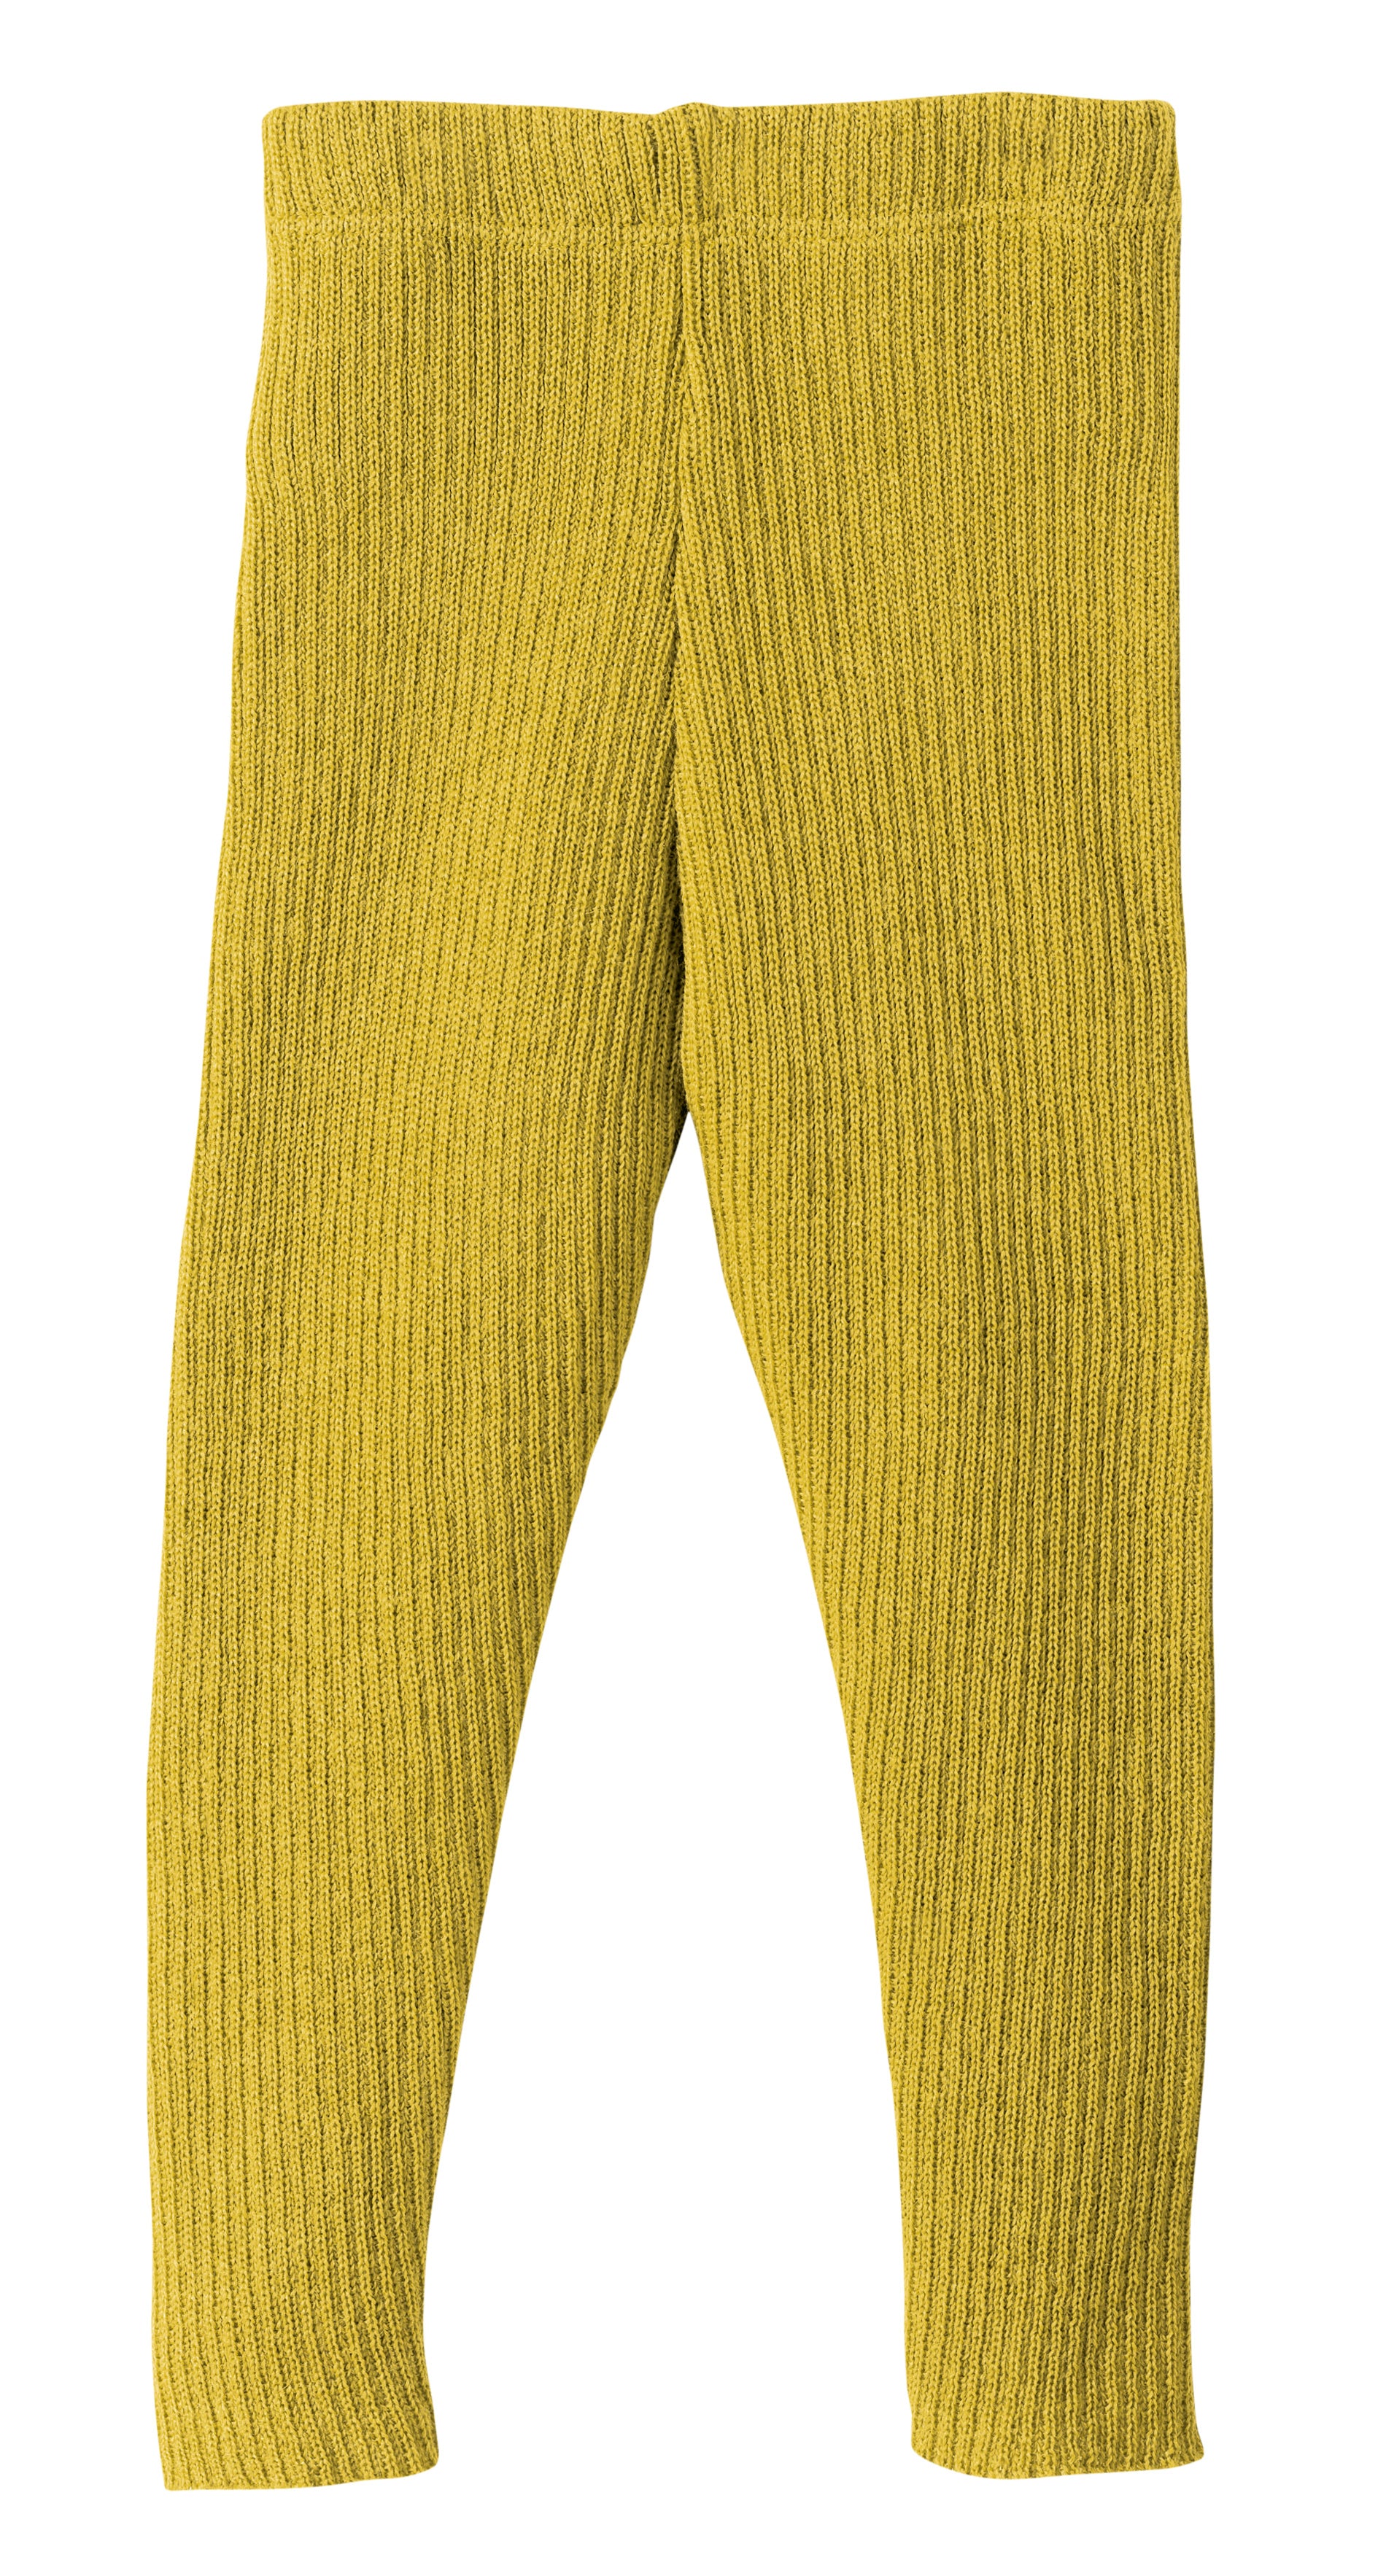 Disana Knitted Wool Leggings Curry Yellow - Leggings Gebreide Wol